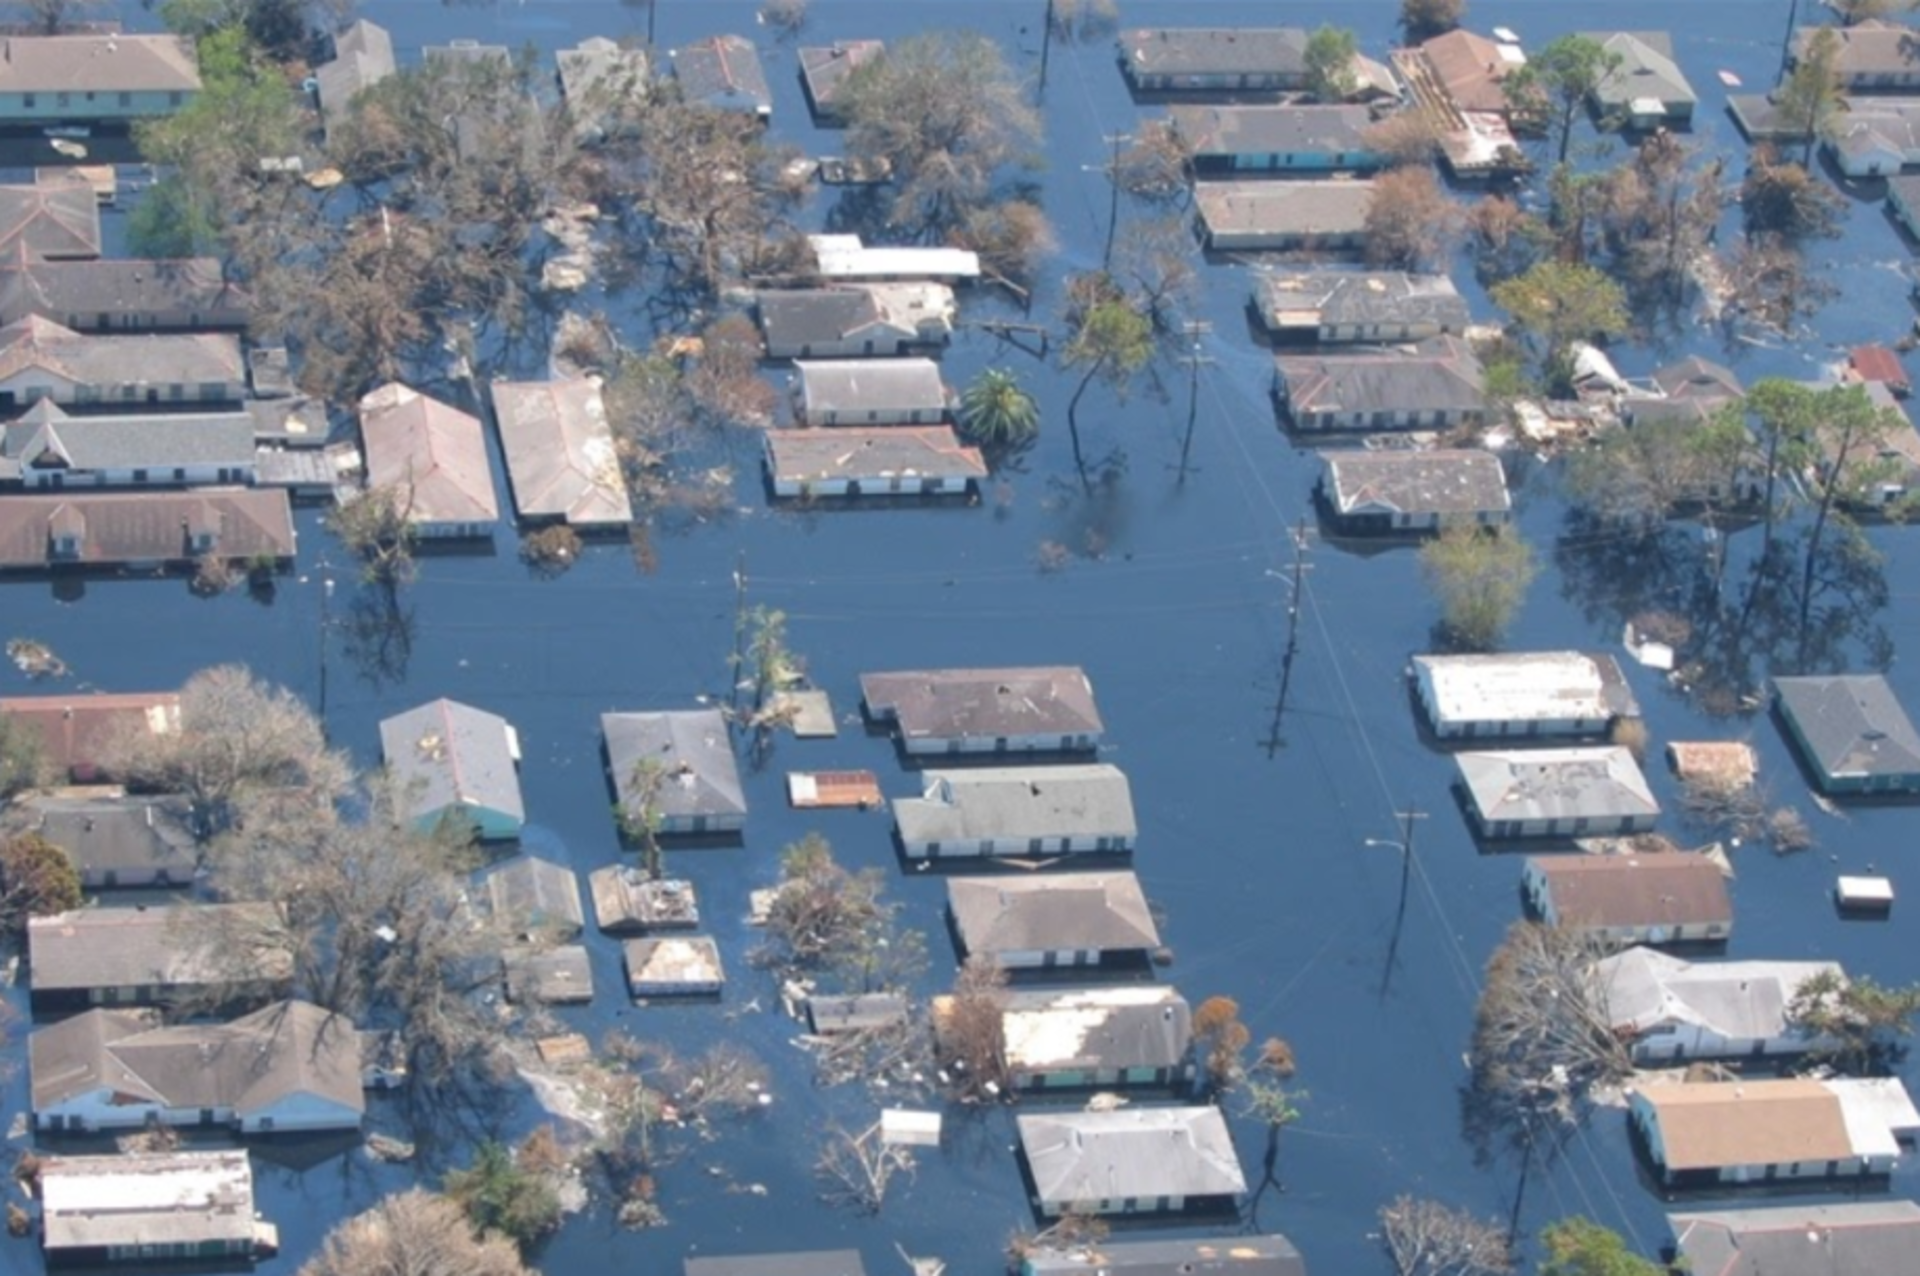 The meteorological history that formed the devastating Hurricane Katrina